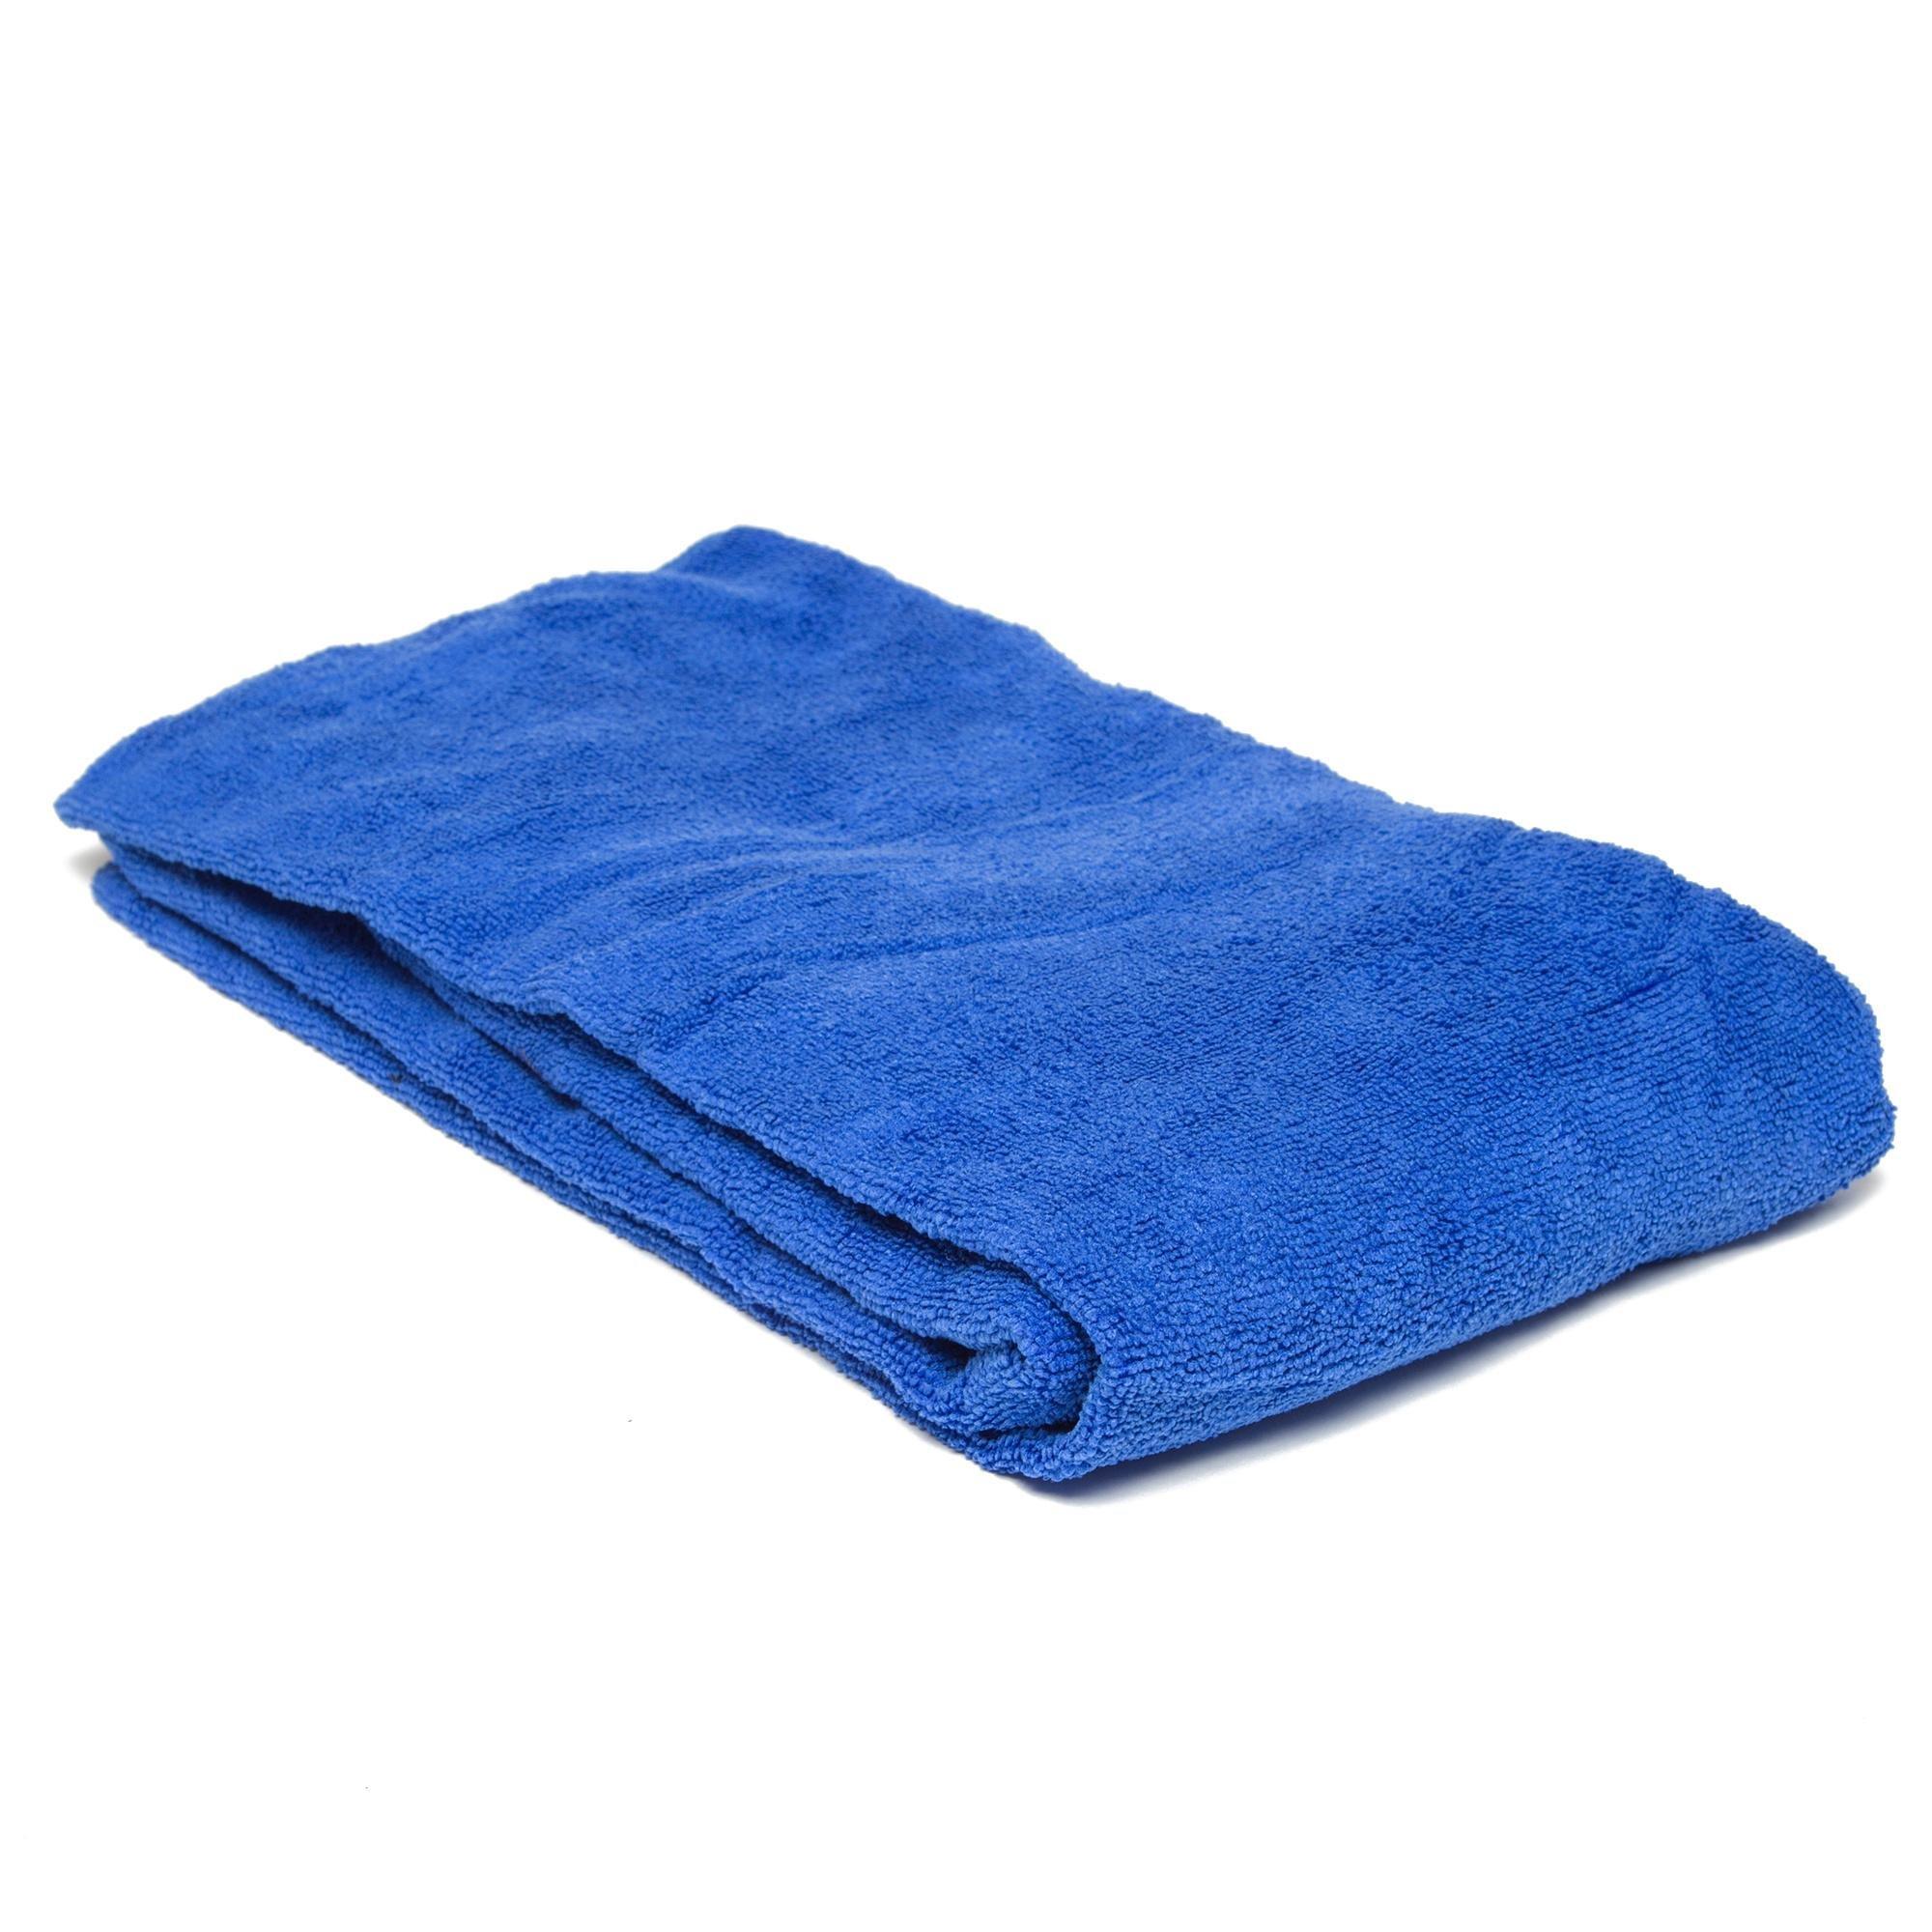 Eurohike Terry Microfibre Travel Towel - Small - Blue/mbl  Blue/mbl